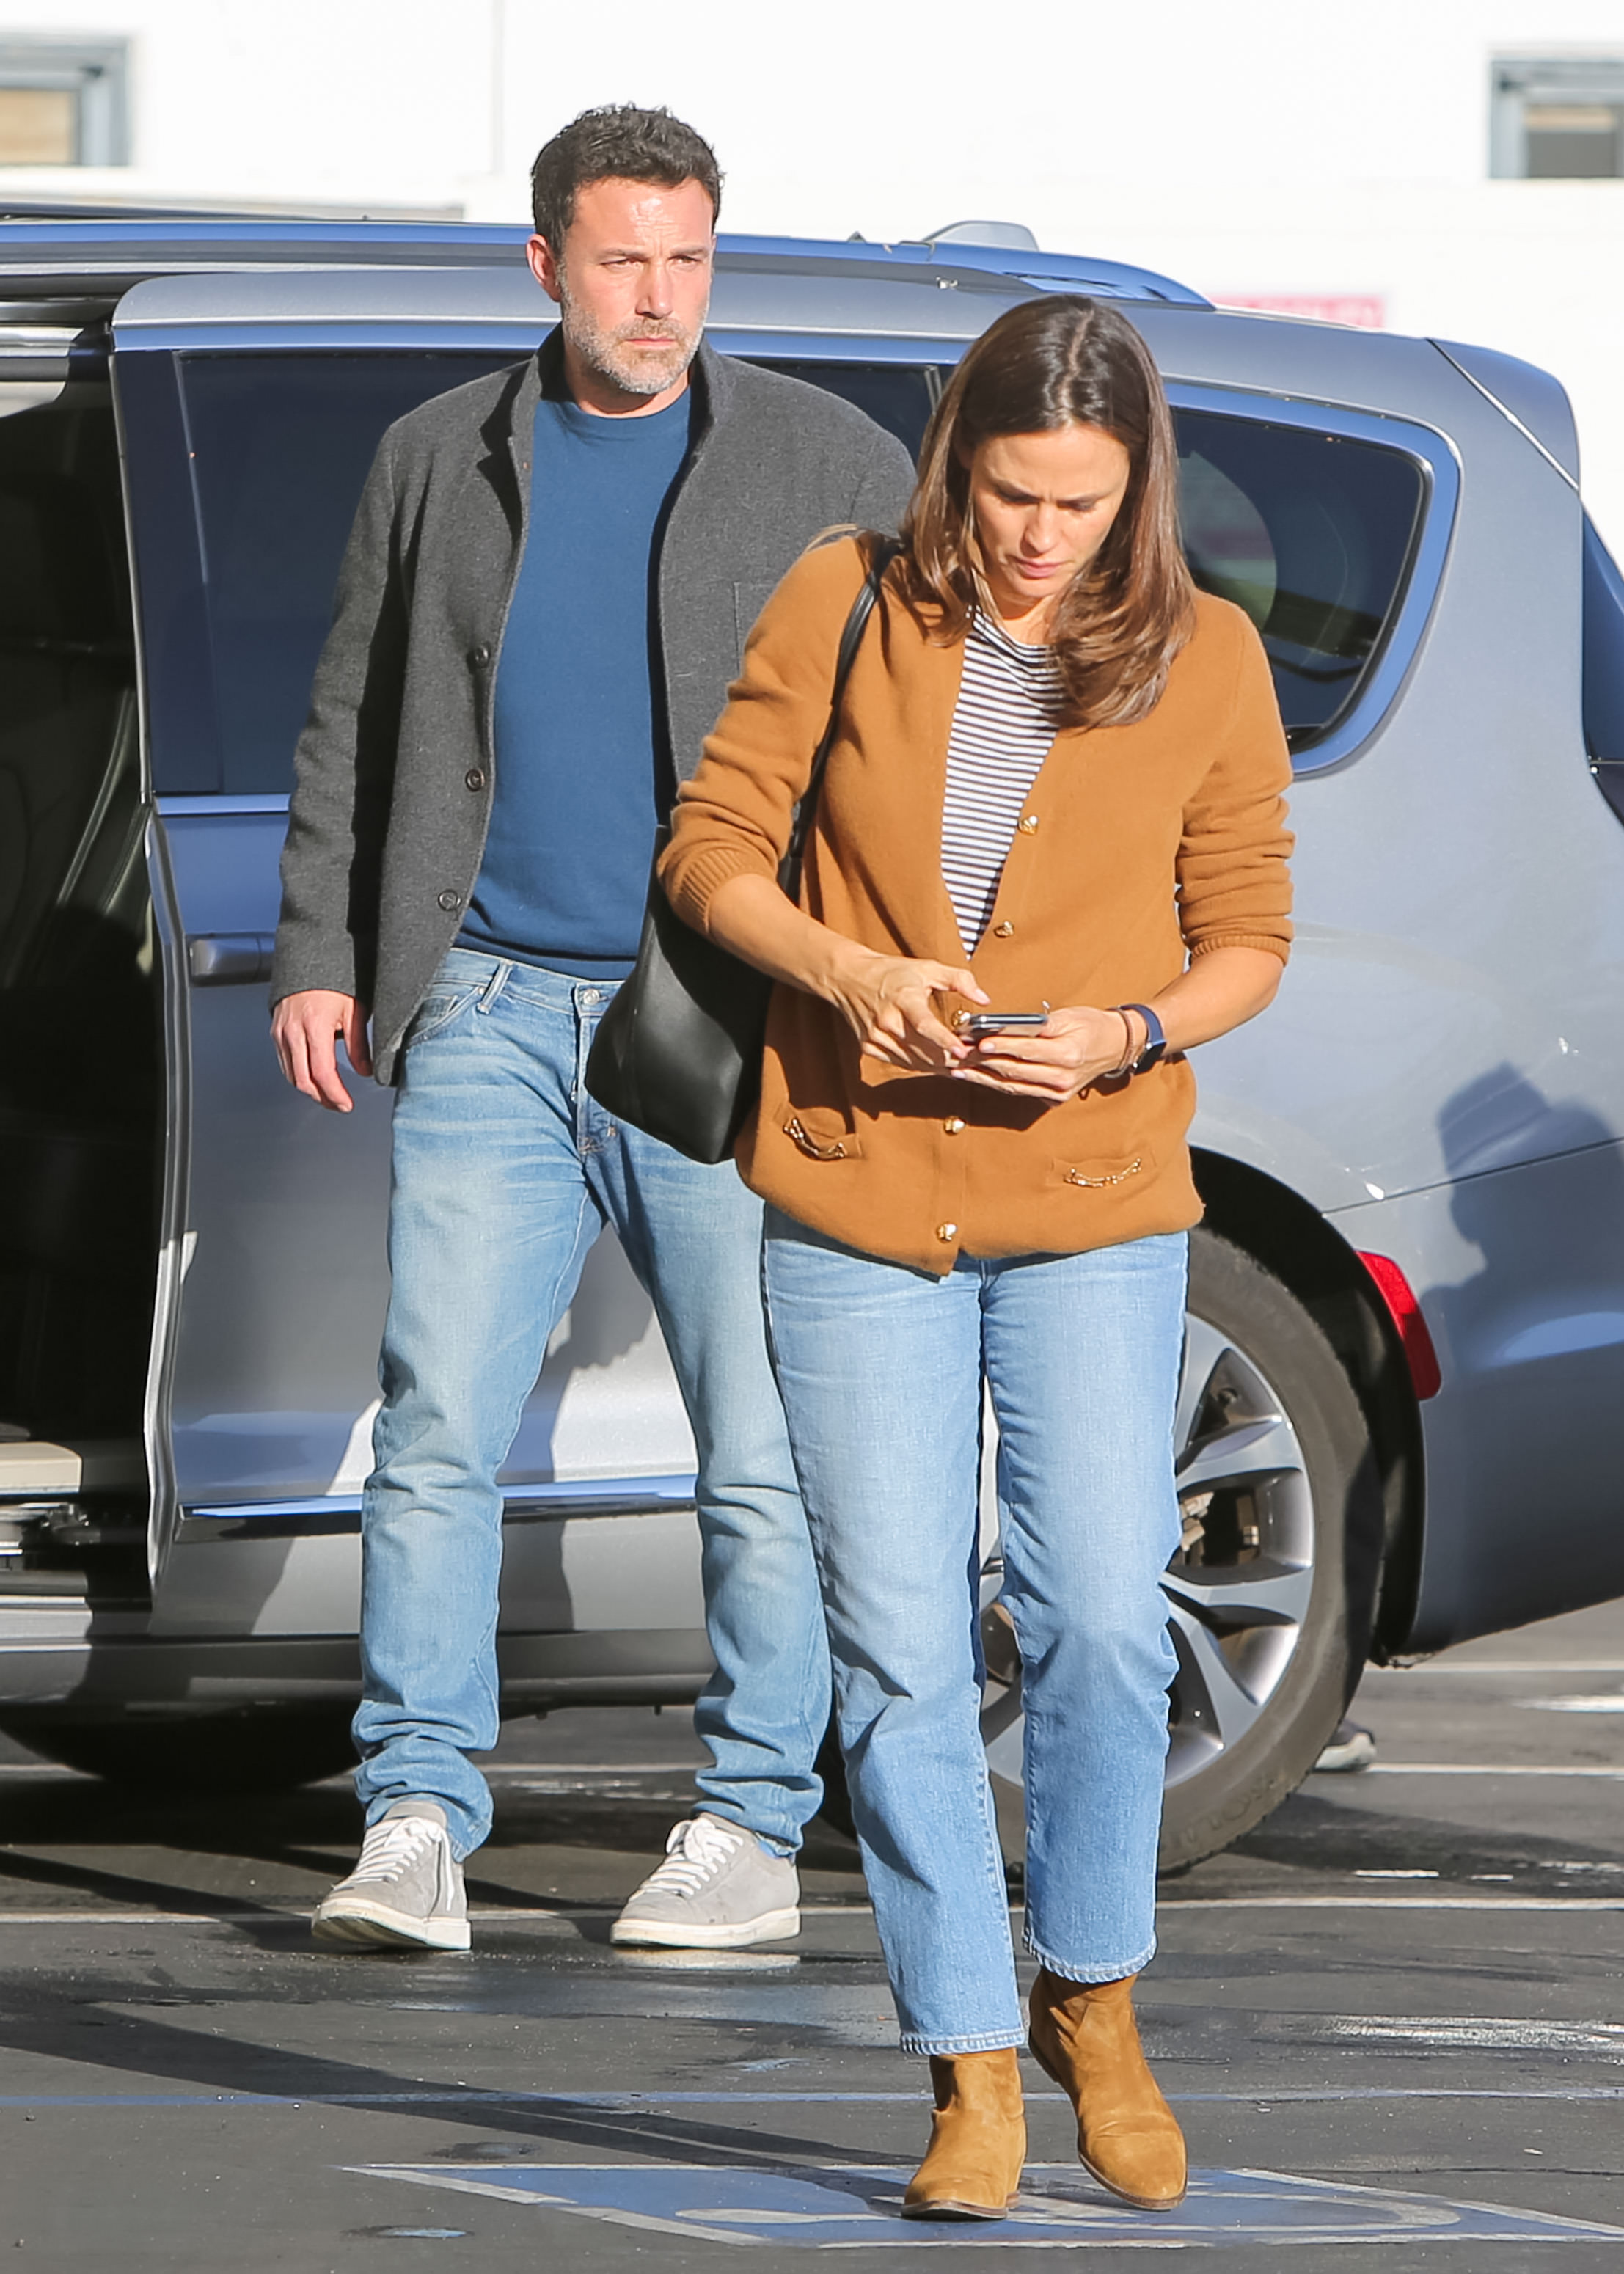 Ben Affleck and Jennifer Garner seen in Los Angeles, California on November 27, 2019 | Source: Getty Images